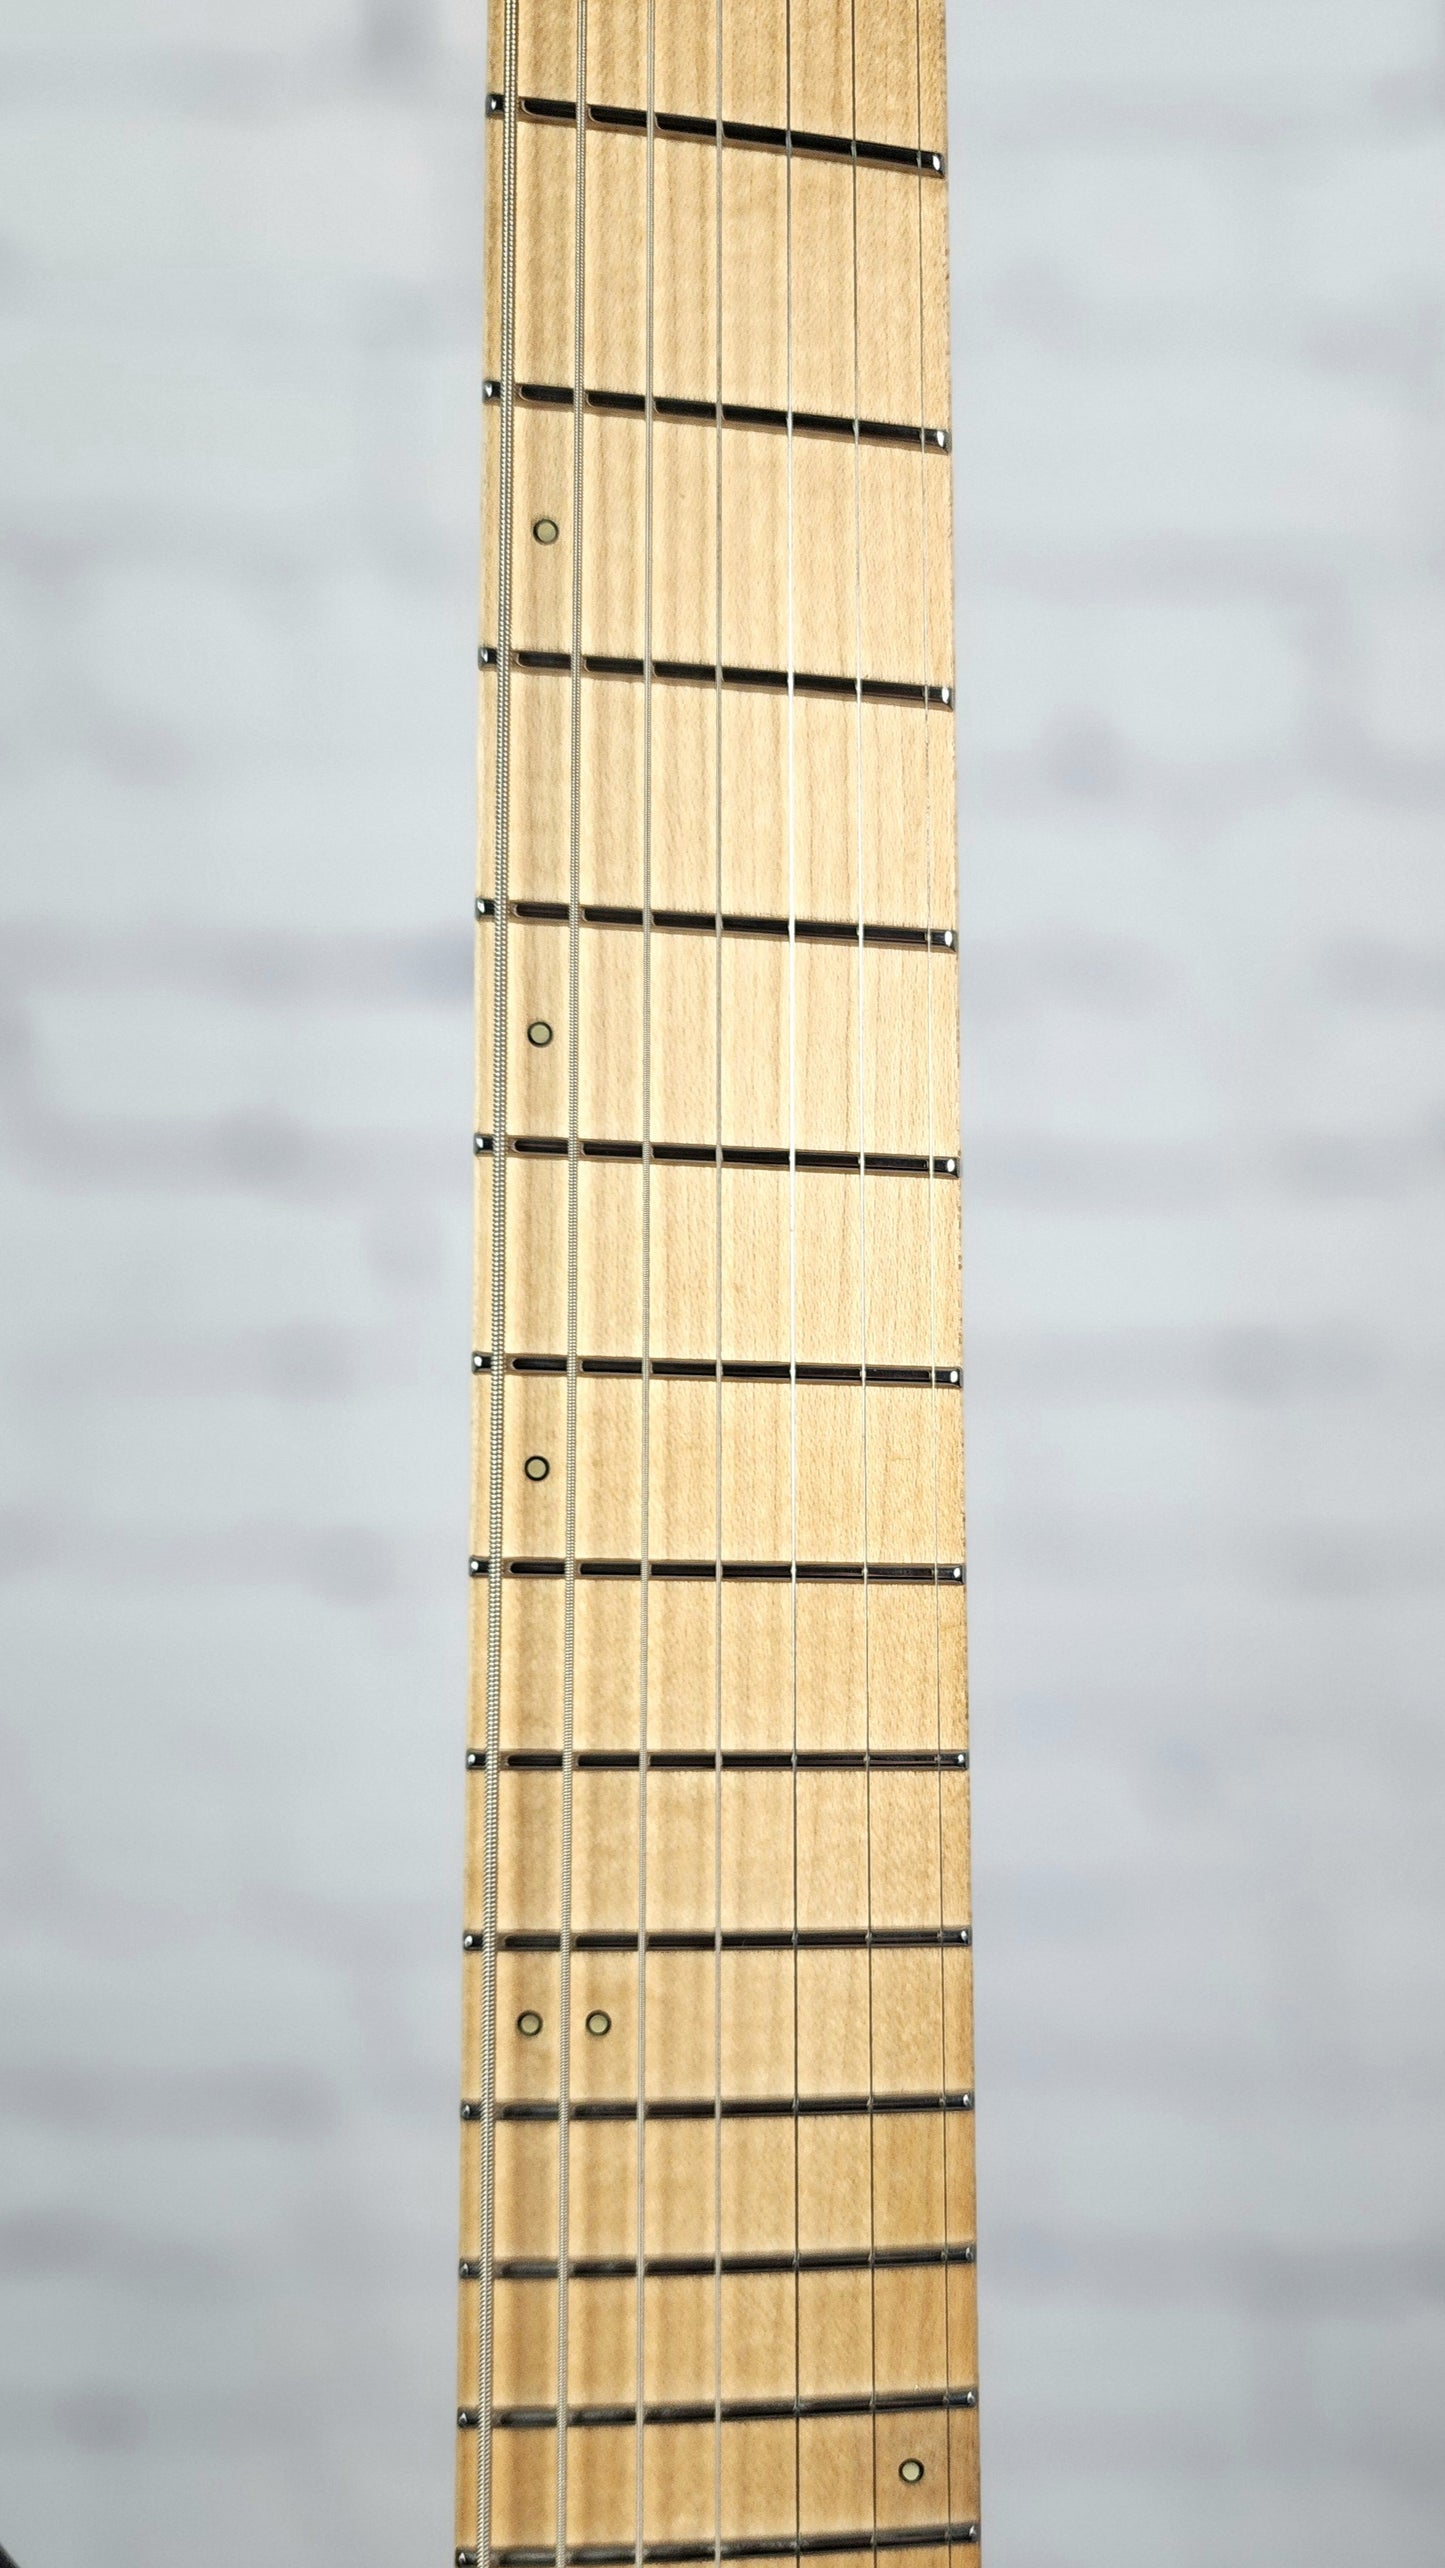 Strandberg Boden Standard NX 7 String Electric Guitar Purple